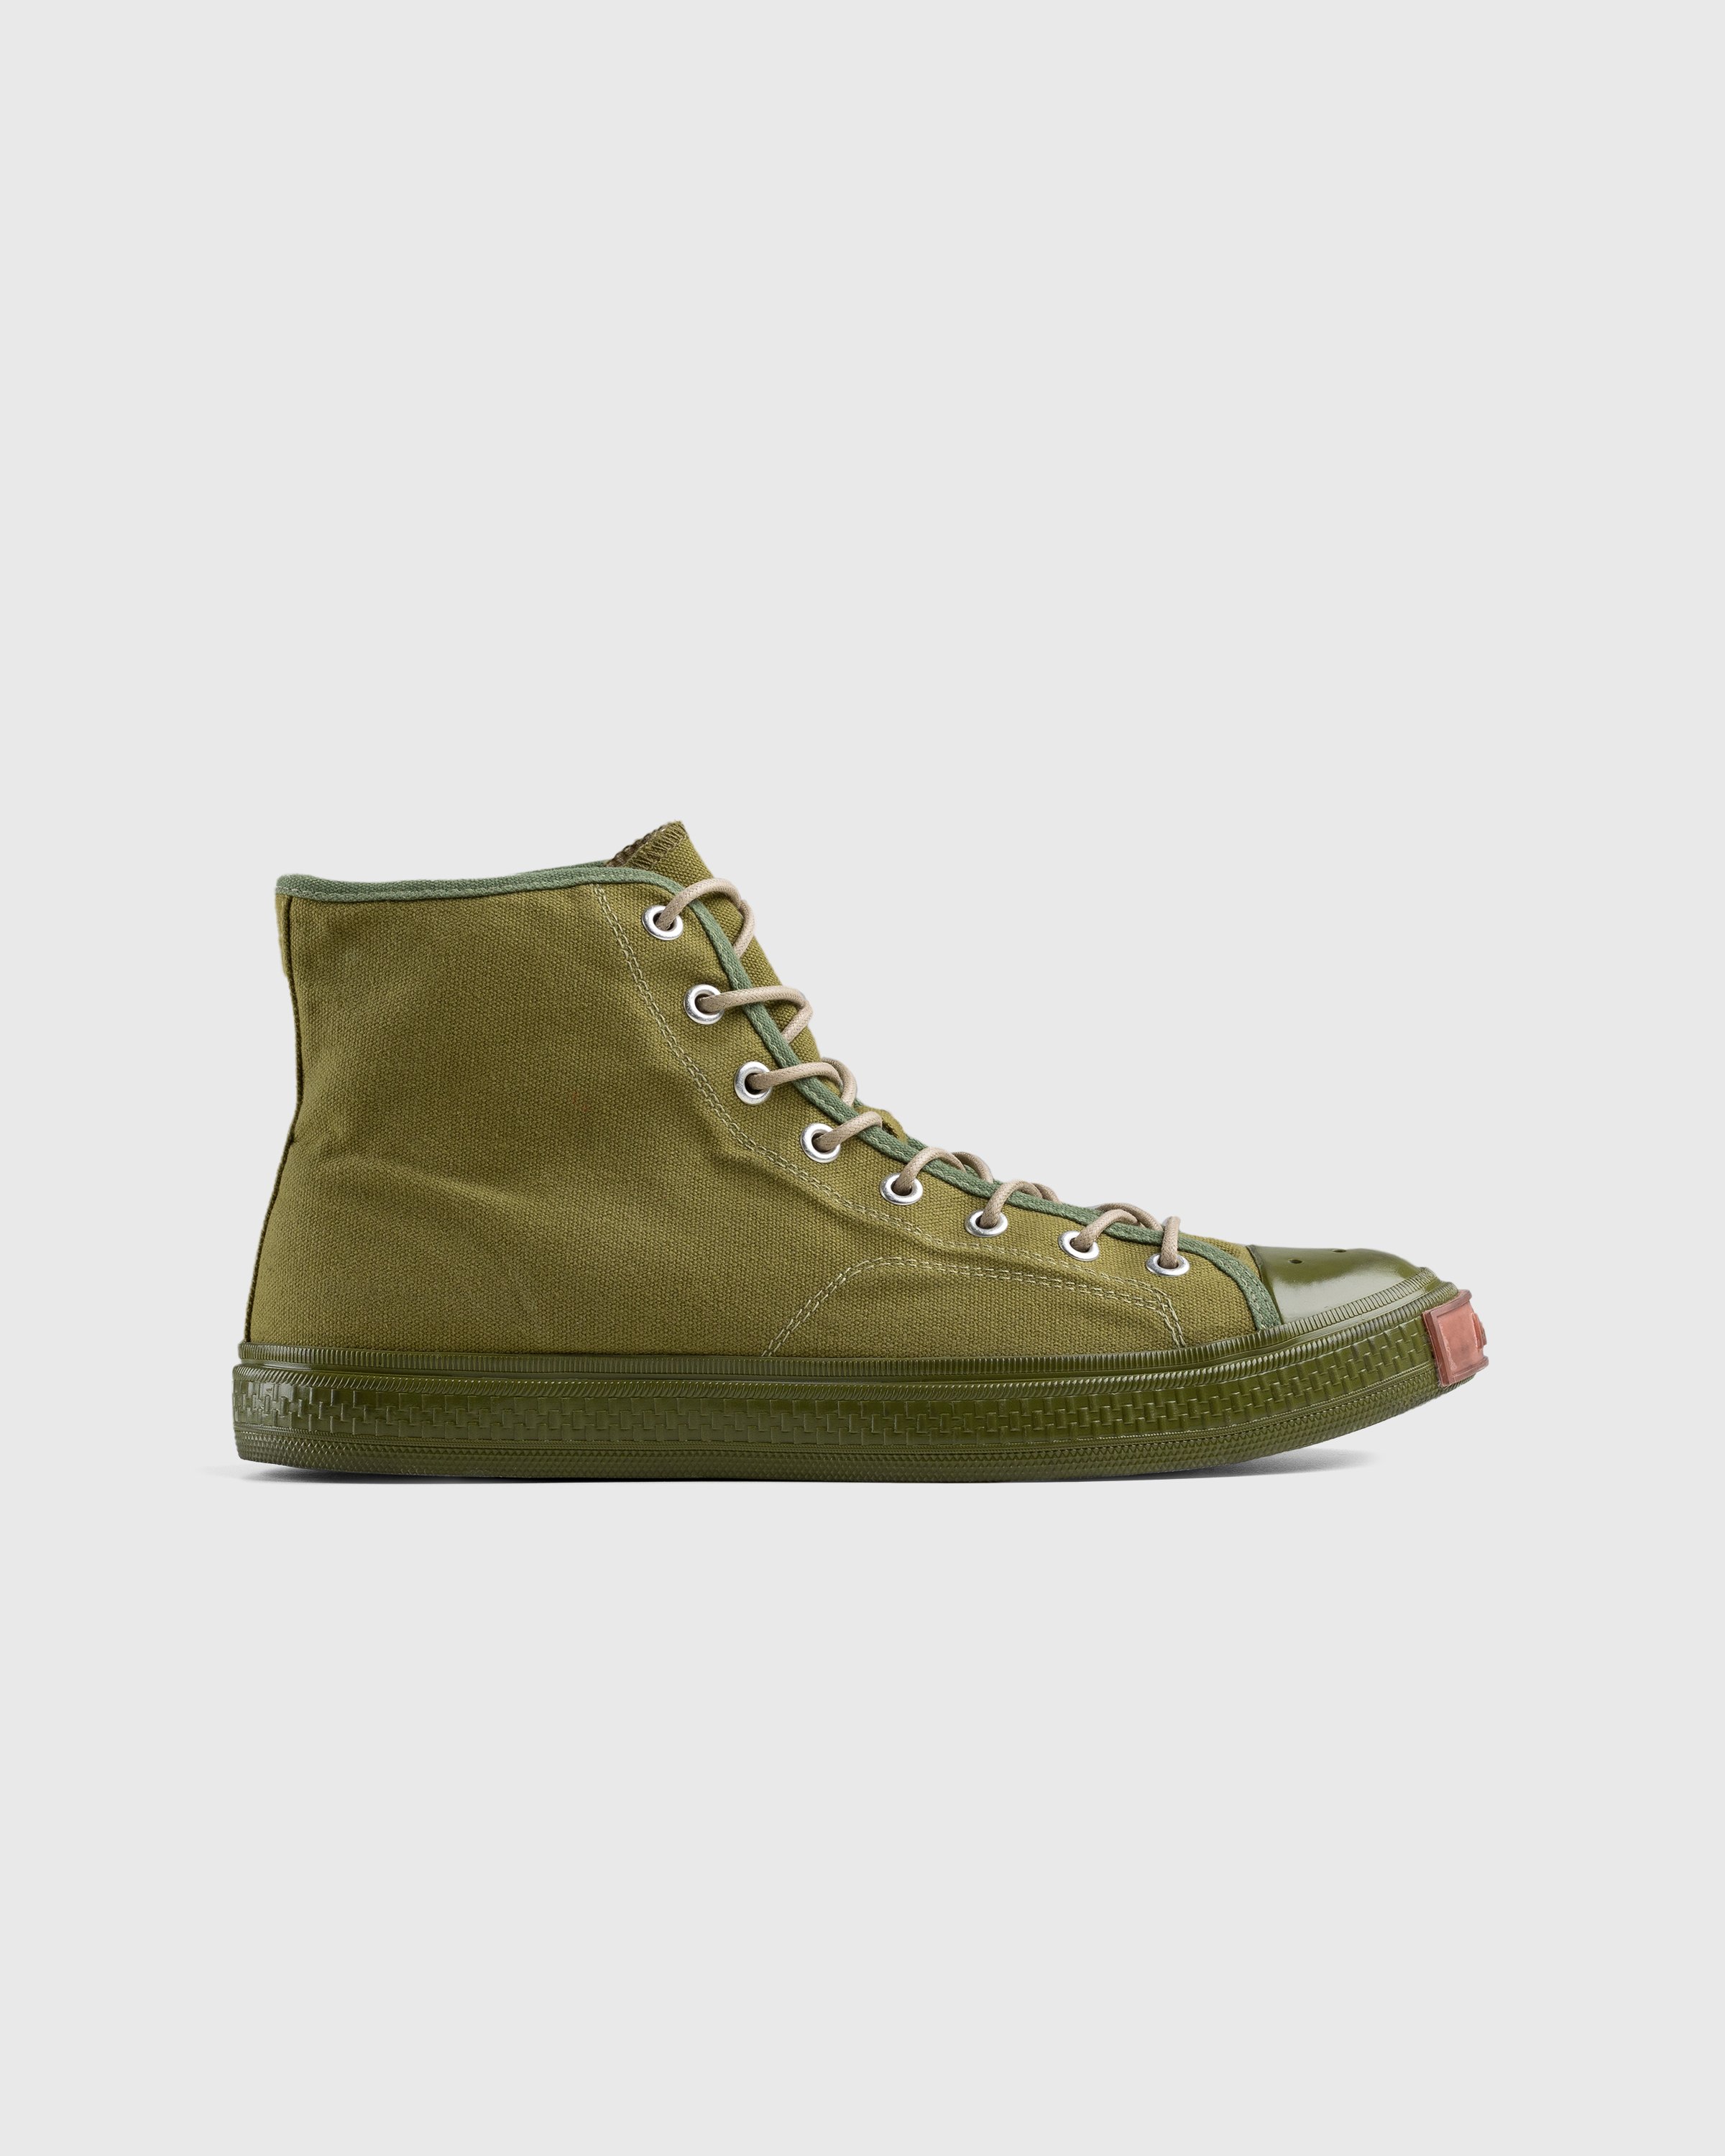 Acne Studios - Ballow High-Top Sneakers Olive Green - Footwear - Green - Image 1